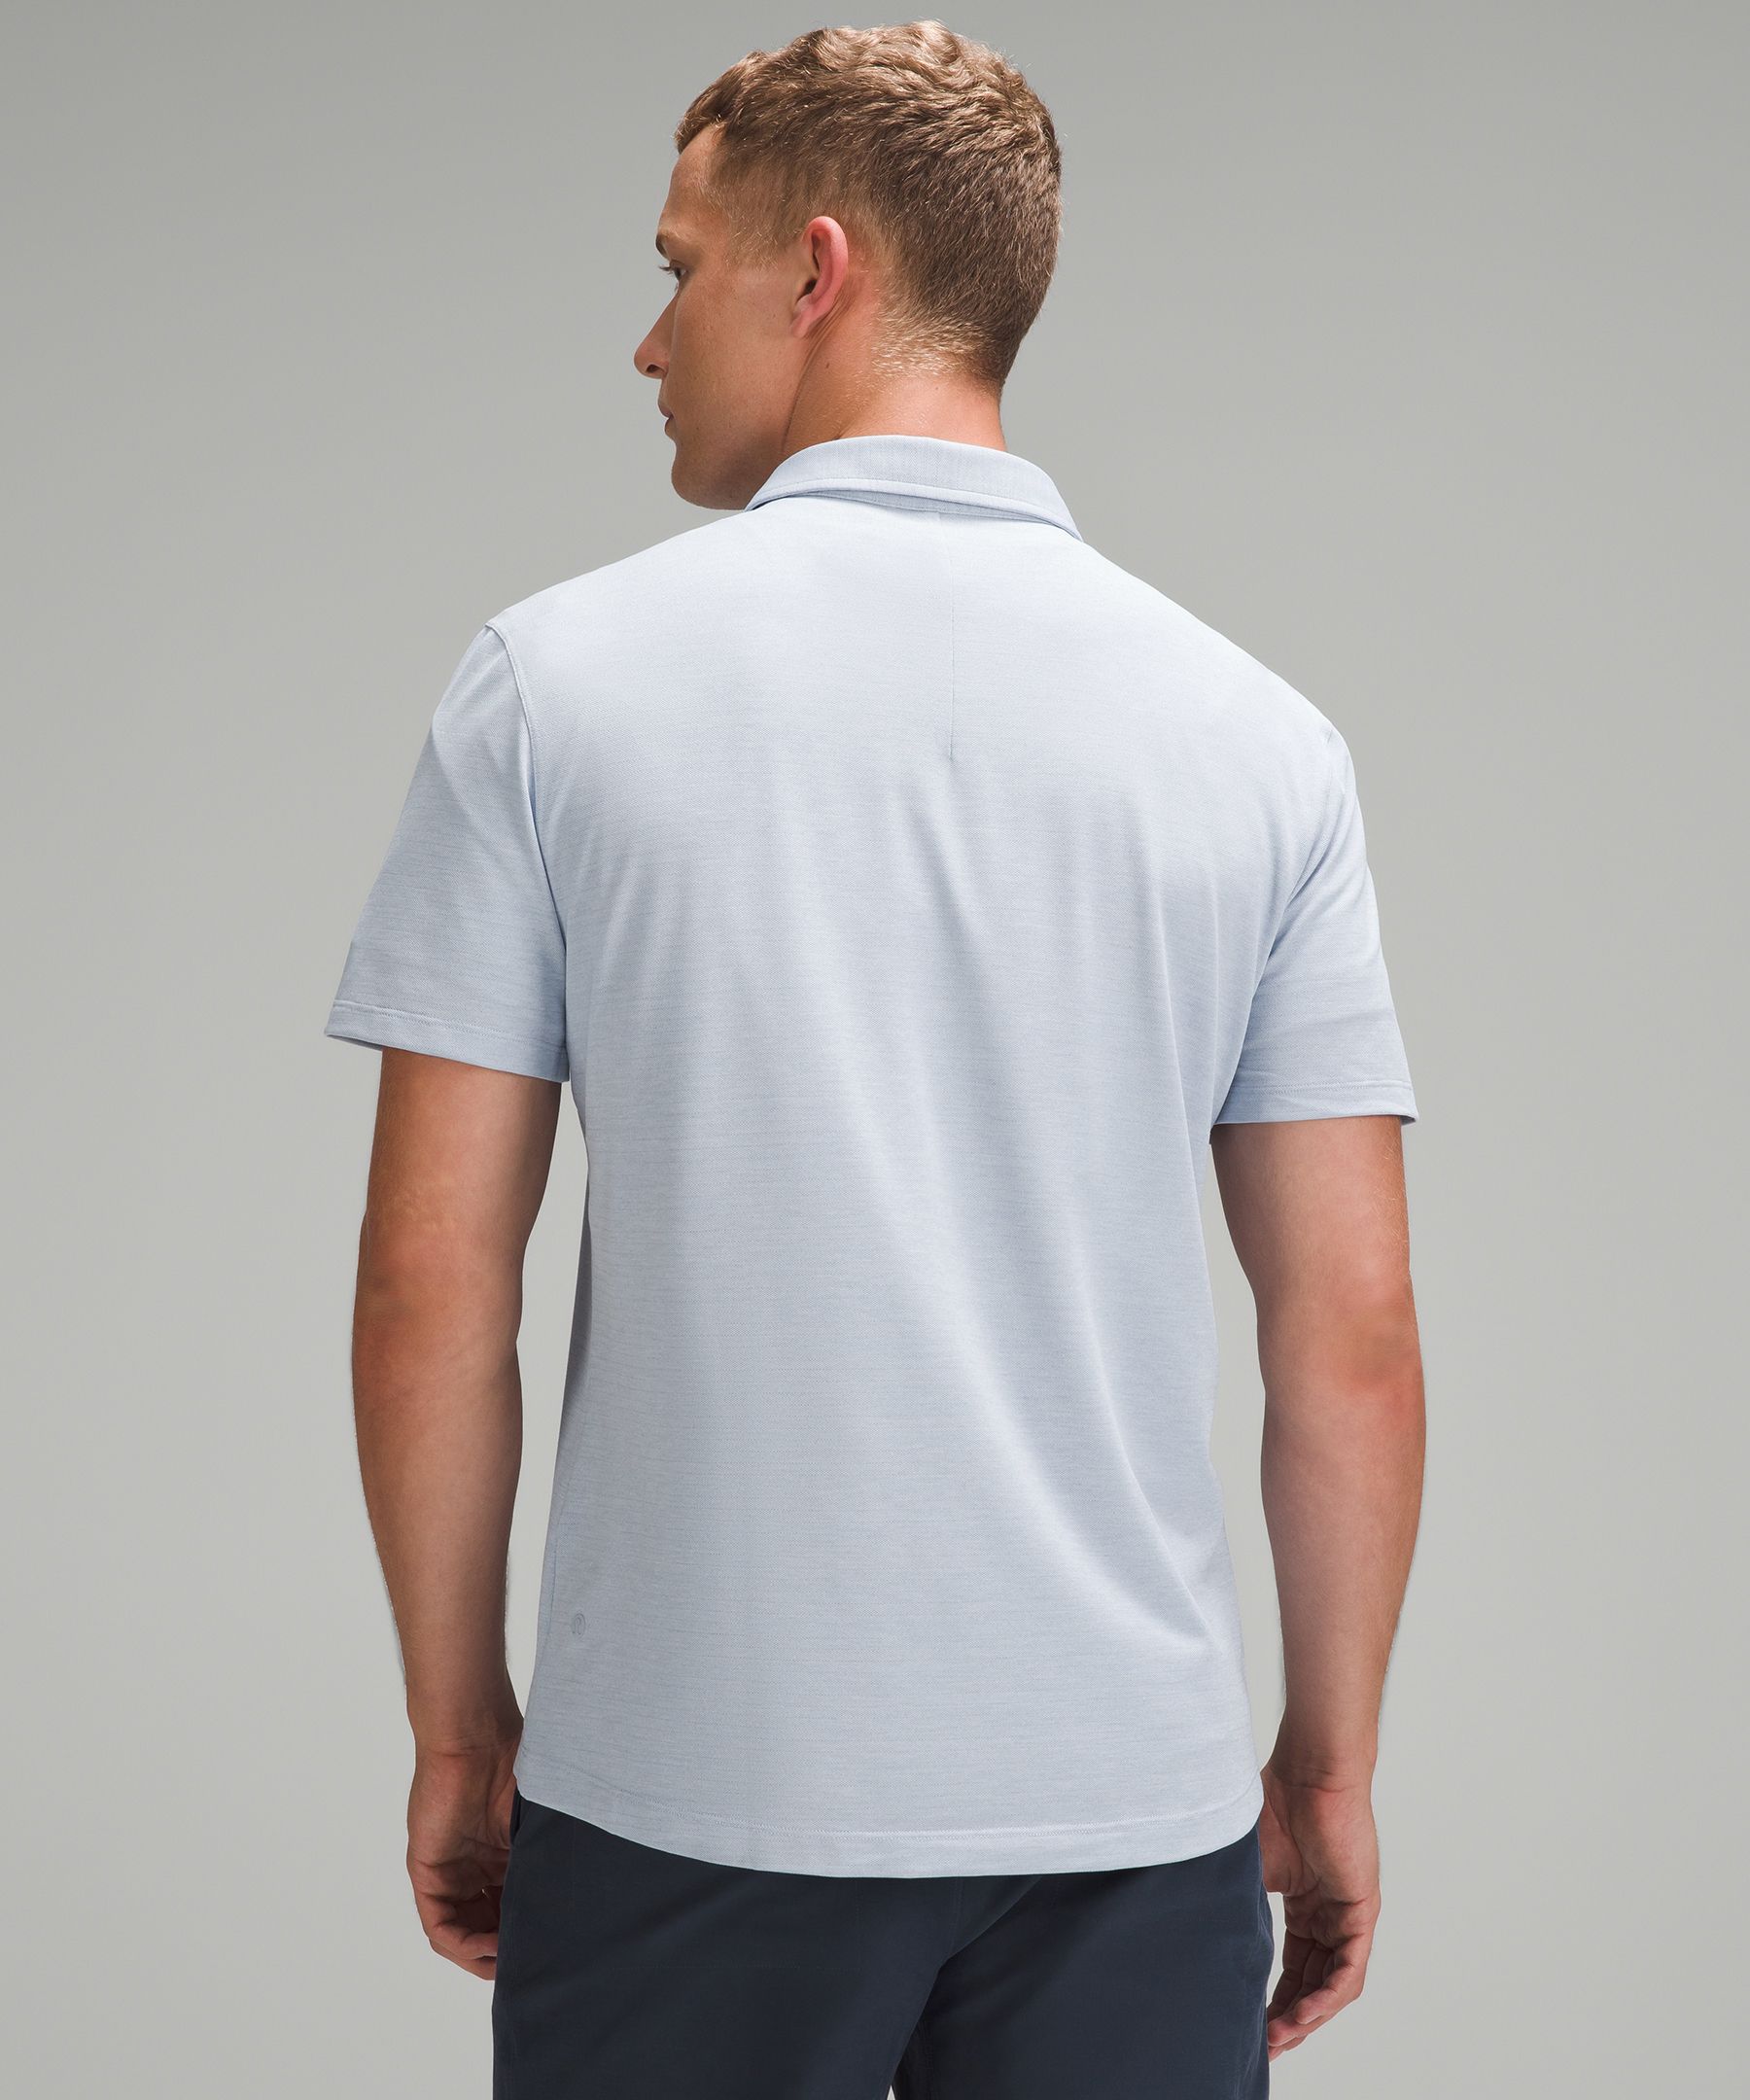 Lululemon athletica Evolution Short-Sleeve Polo Shirt *Pique